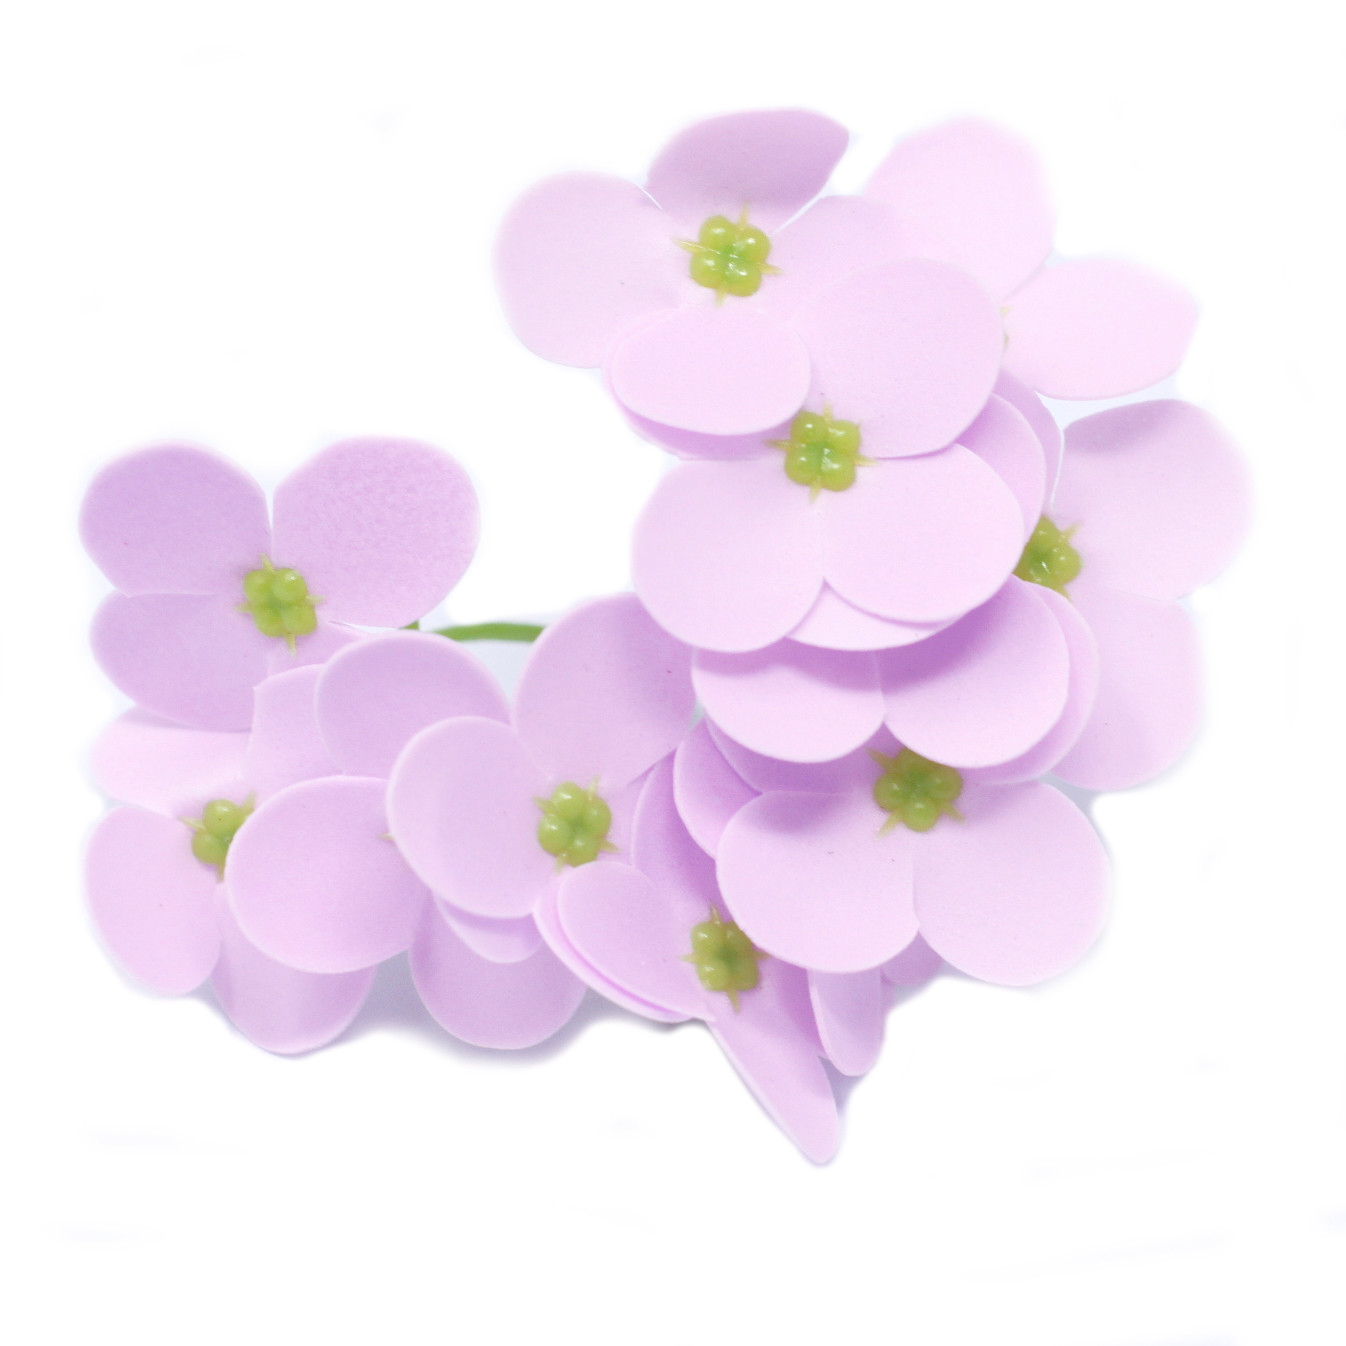 10 x Craft Soap Flowers - Hyacinth Bean - Lavender